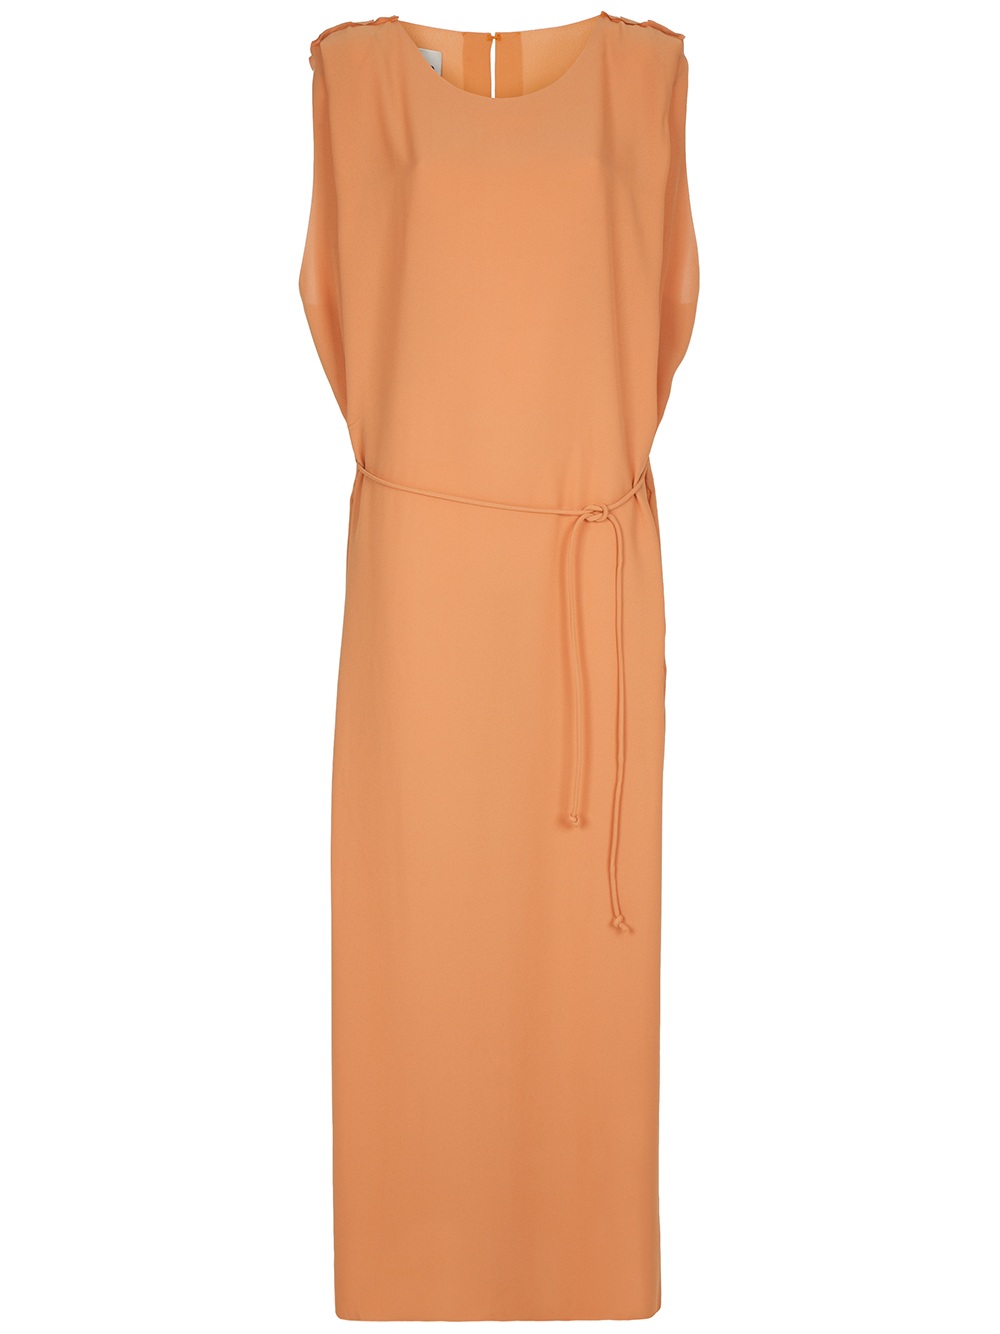 Acne Marnay Crepe Dress in Orange | Lyst